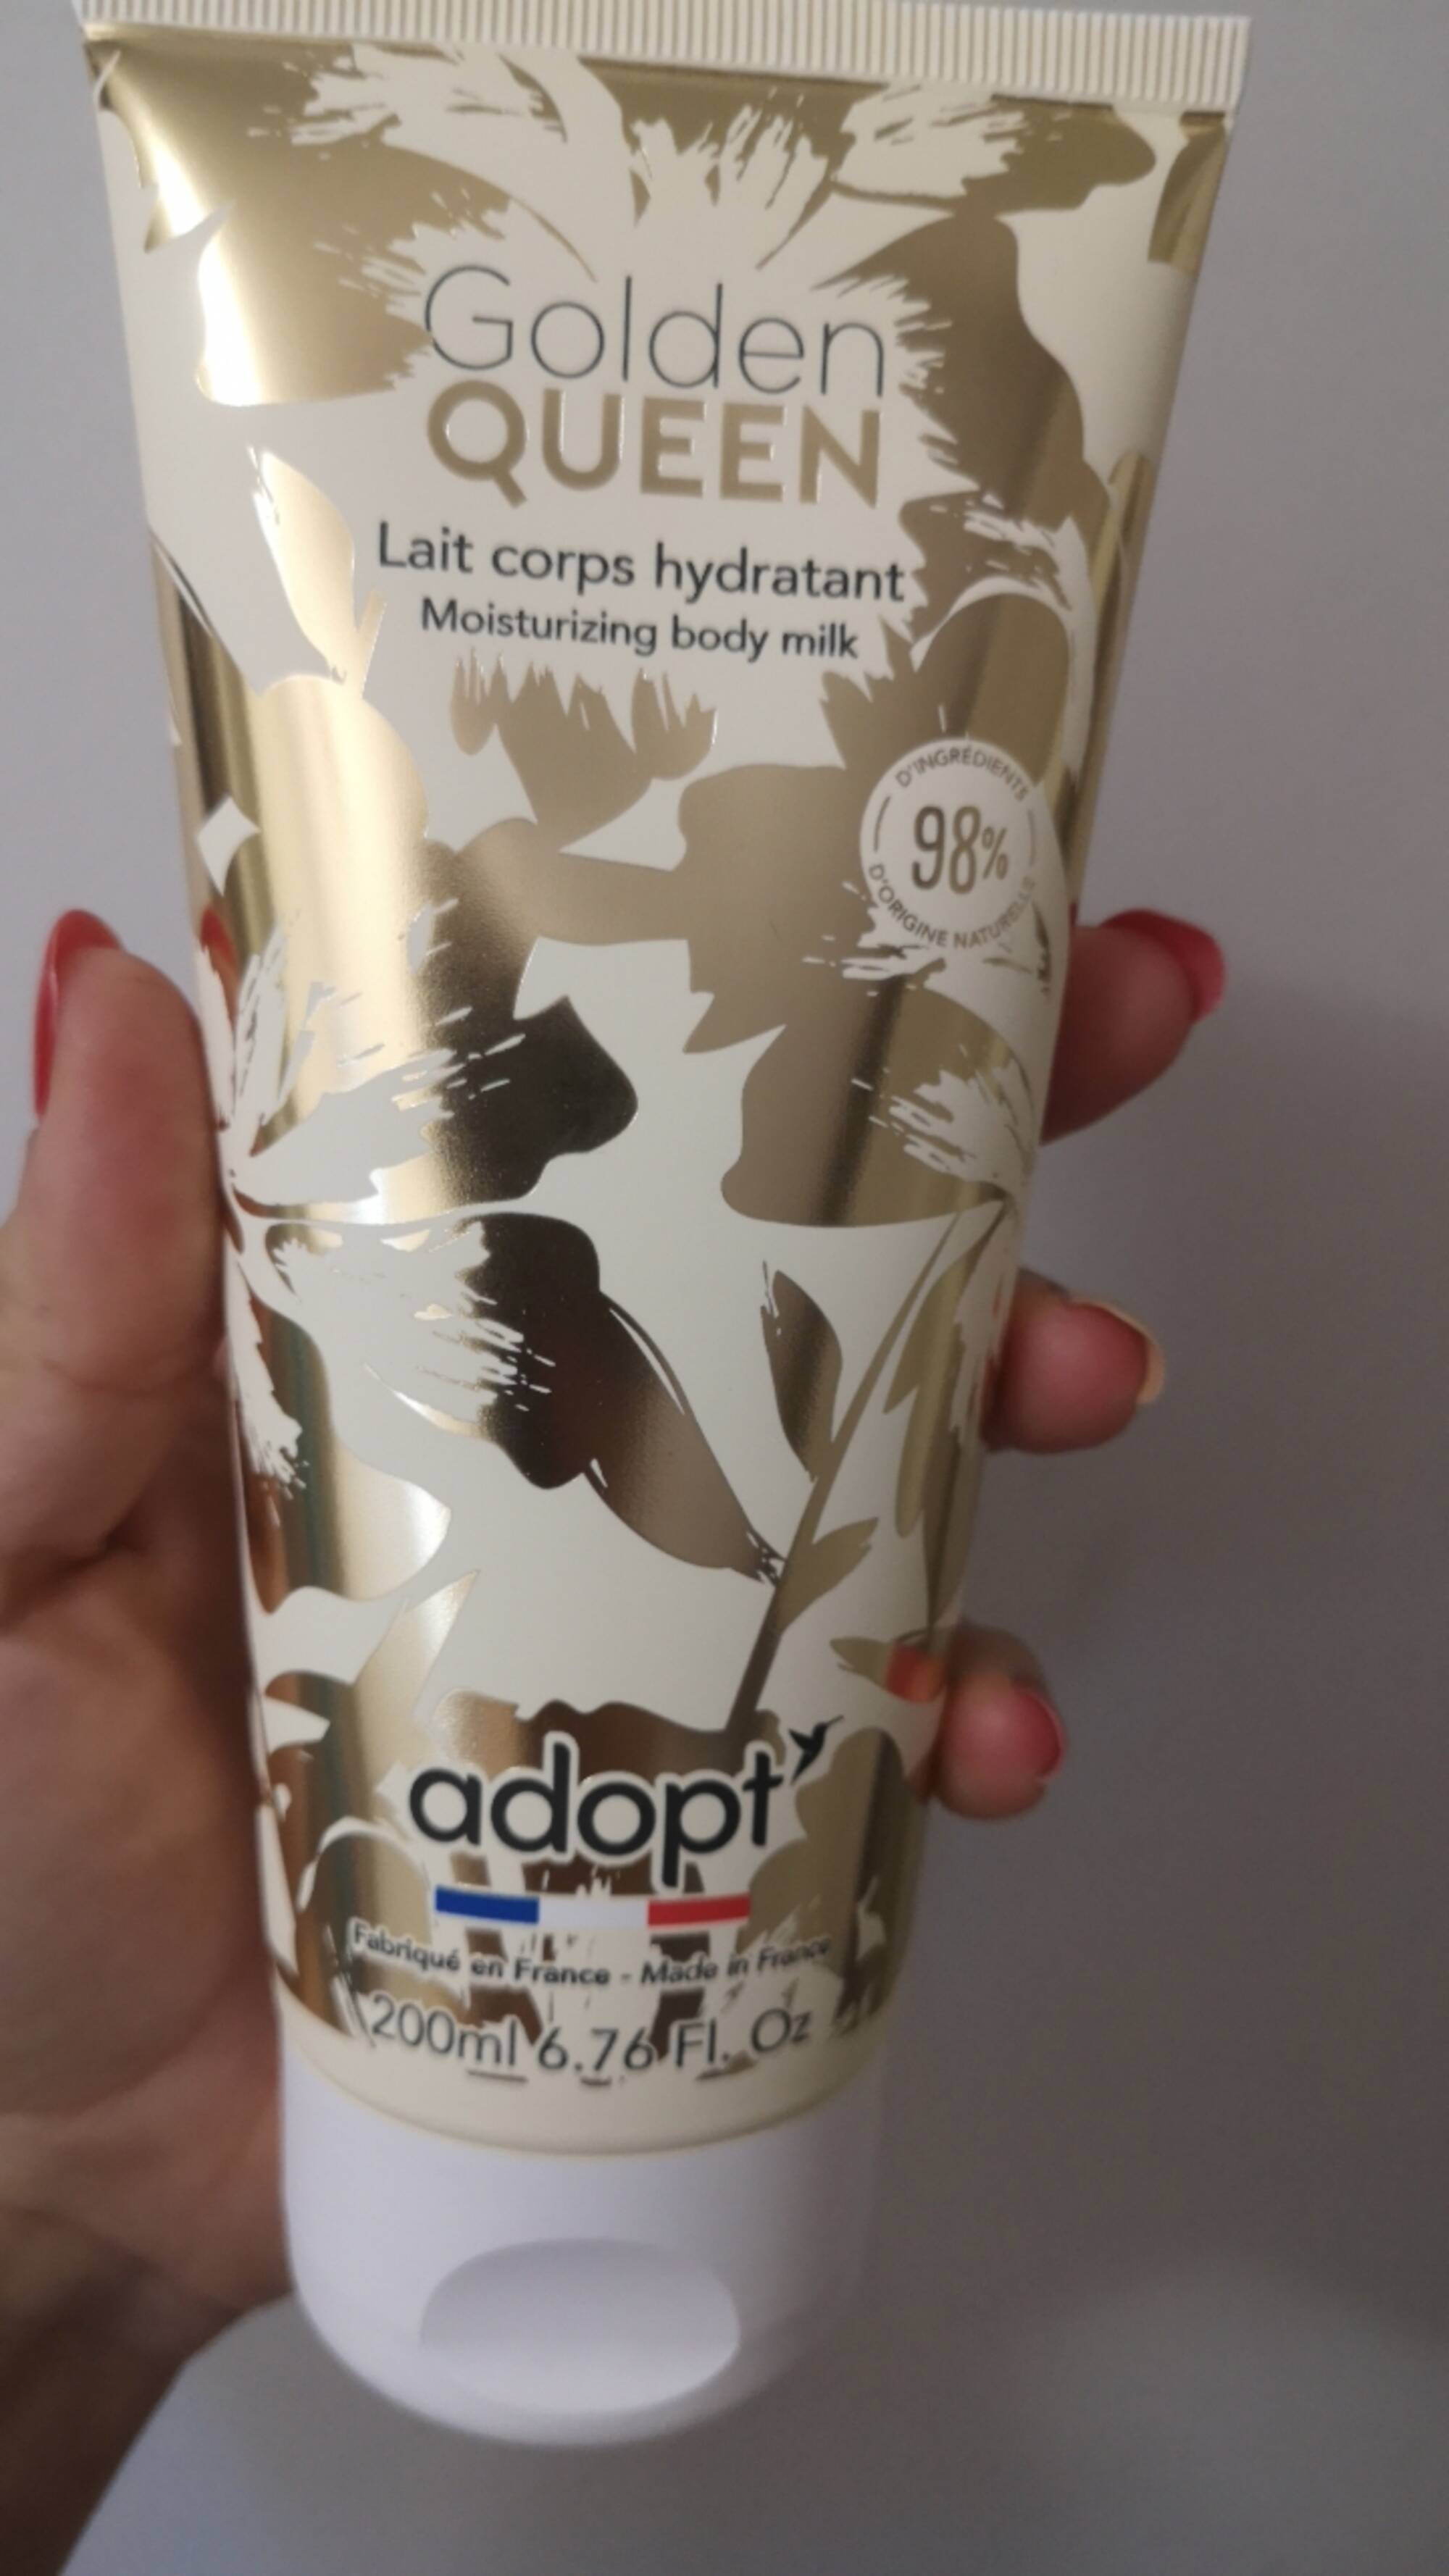 ADOPT' - Golden queen - Lait corps hydratant